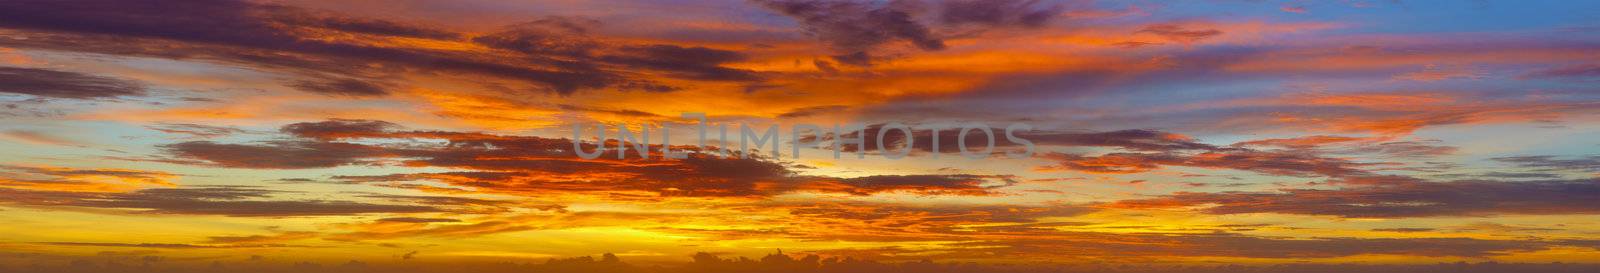 Panoramic photos of sky at sunset - Thailand by pzaxe